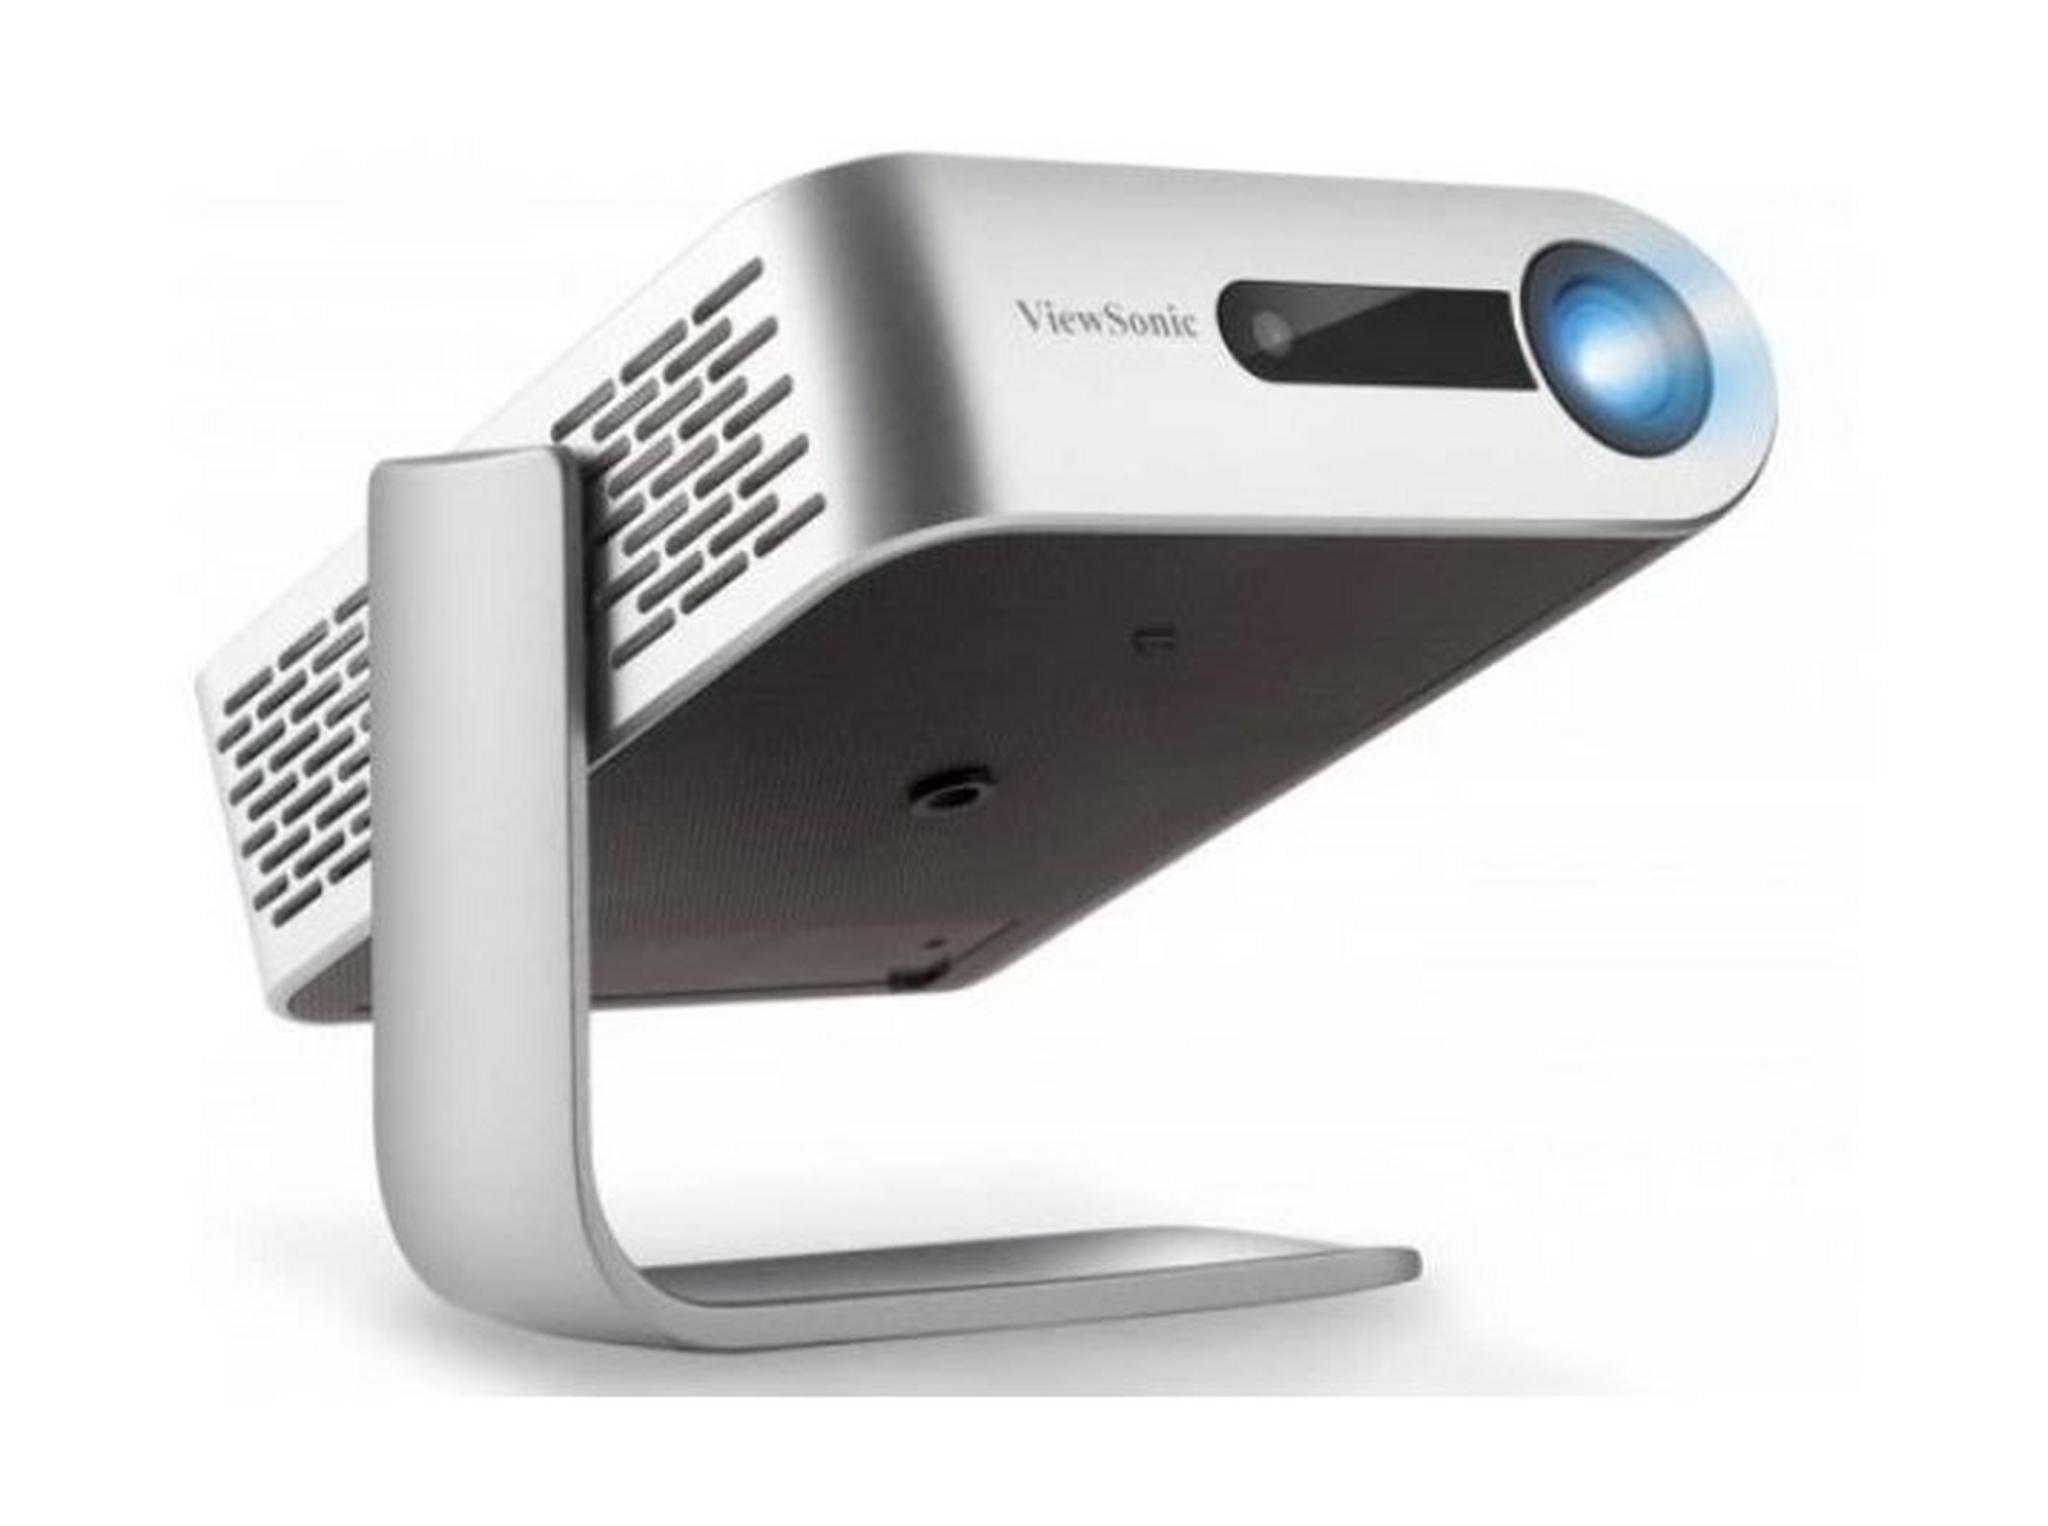 ViewSonic M1+ Smart LED Portable Projector with Harman Kardon Speakers